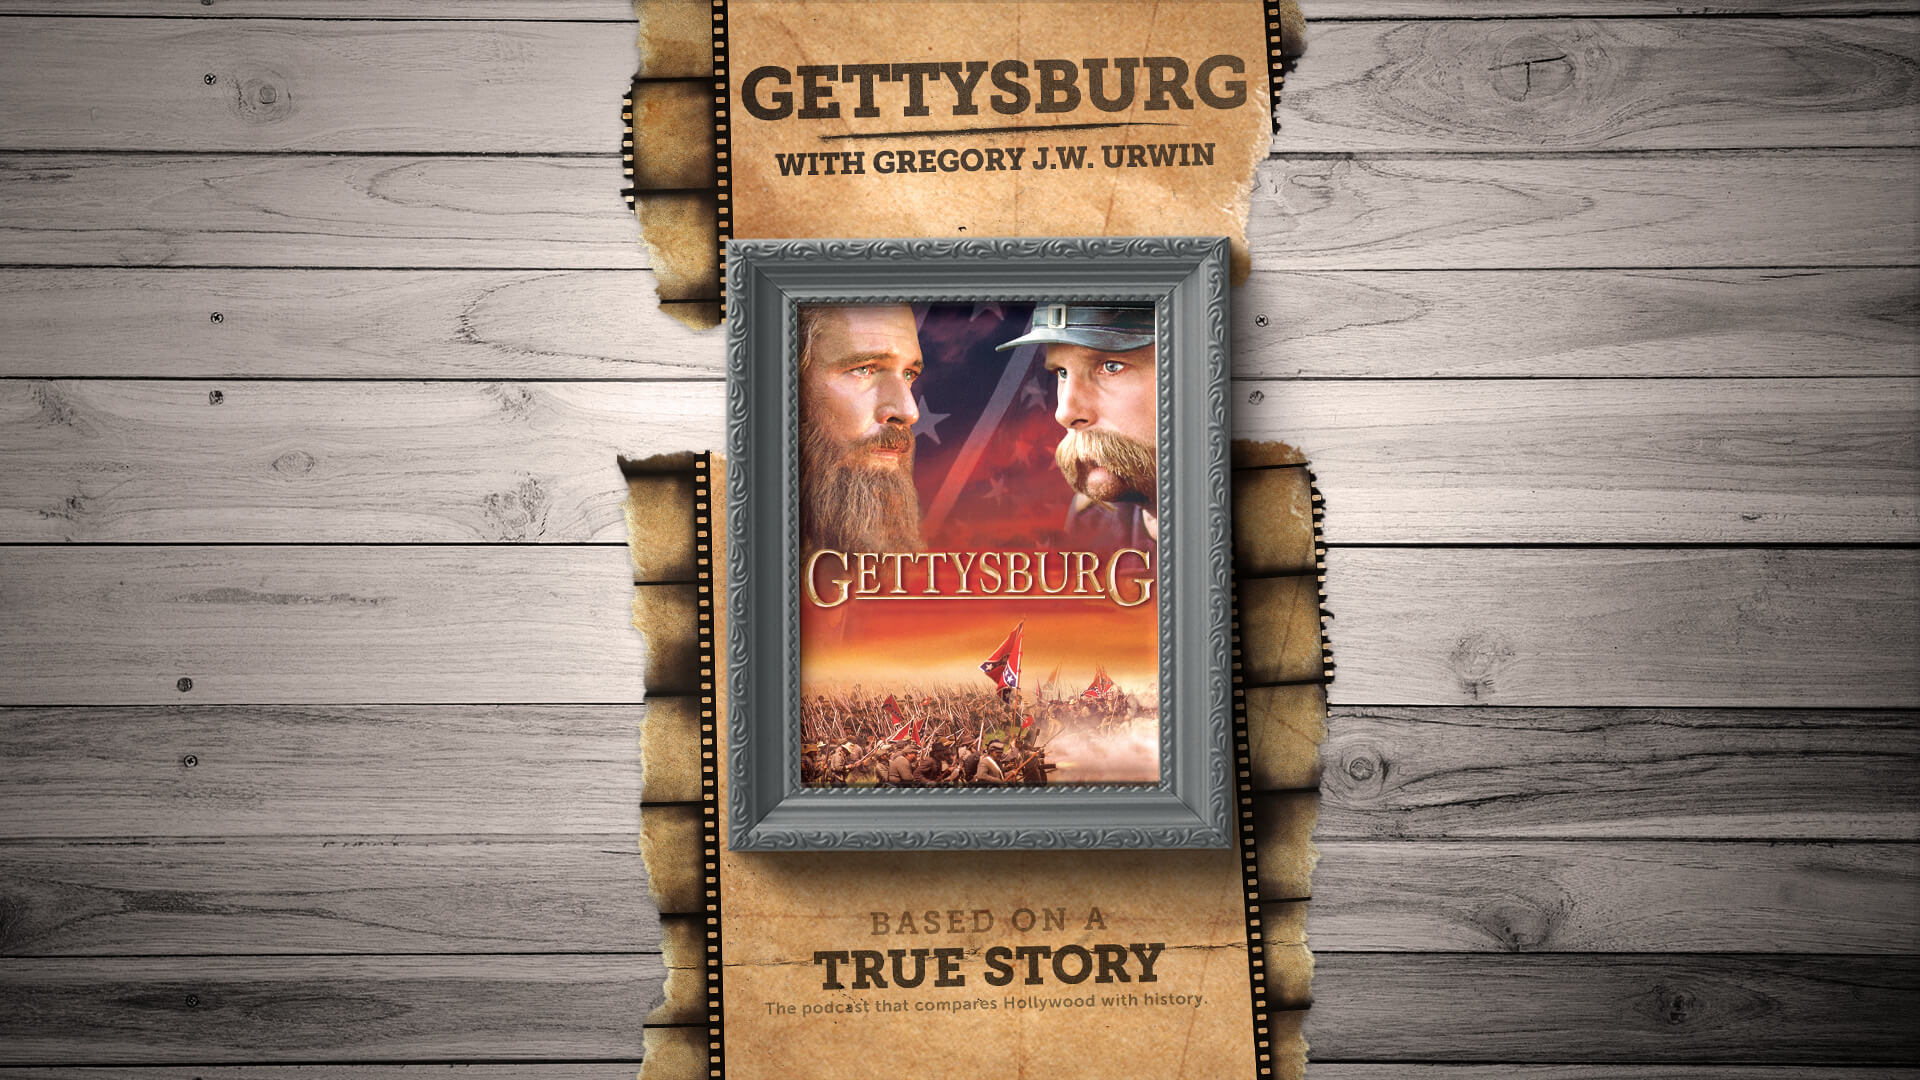 Podcast Episode: Gettysburg with Gregory J.W. Urwin